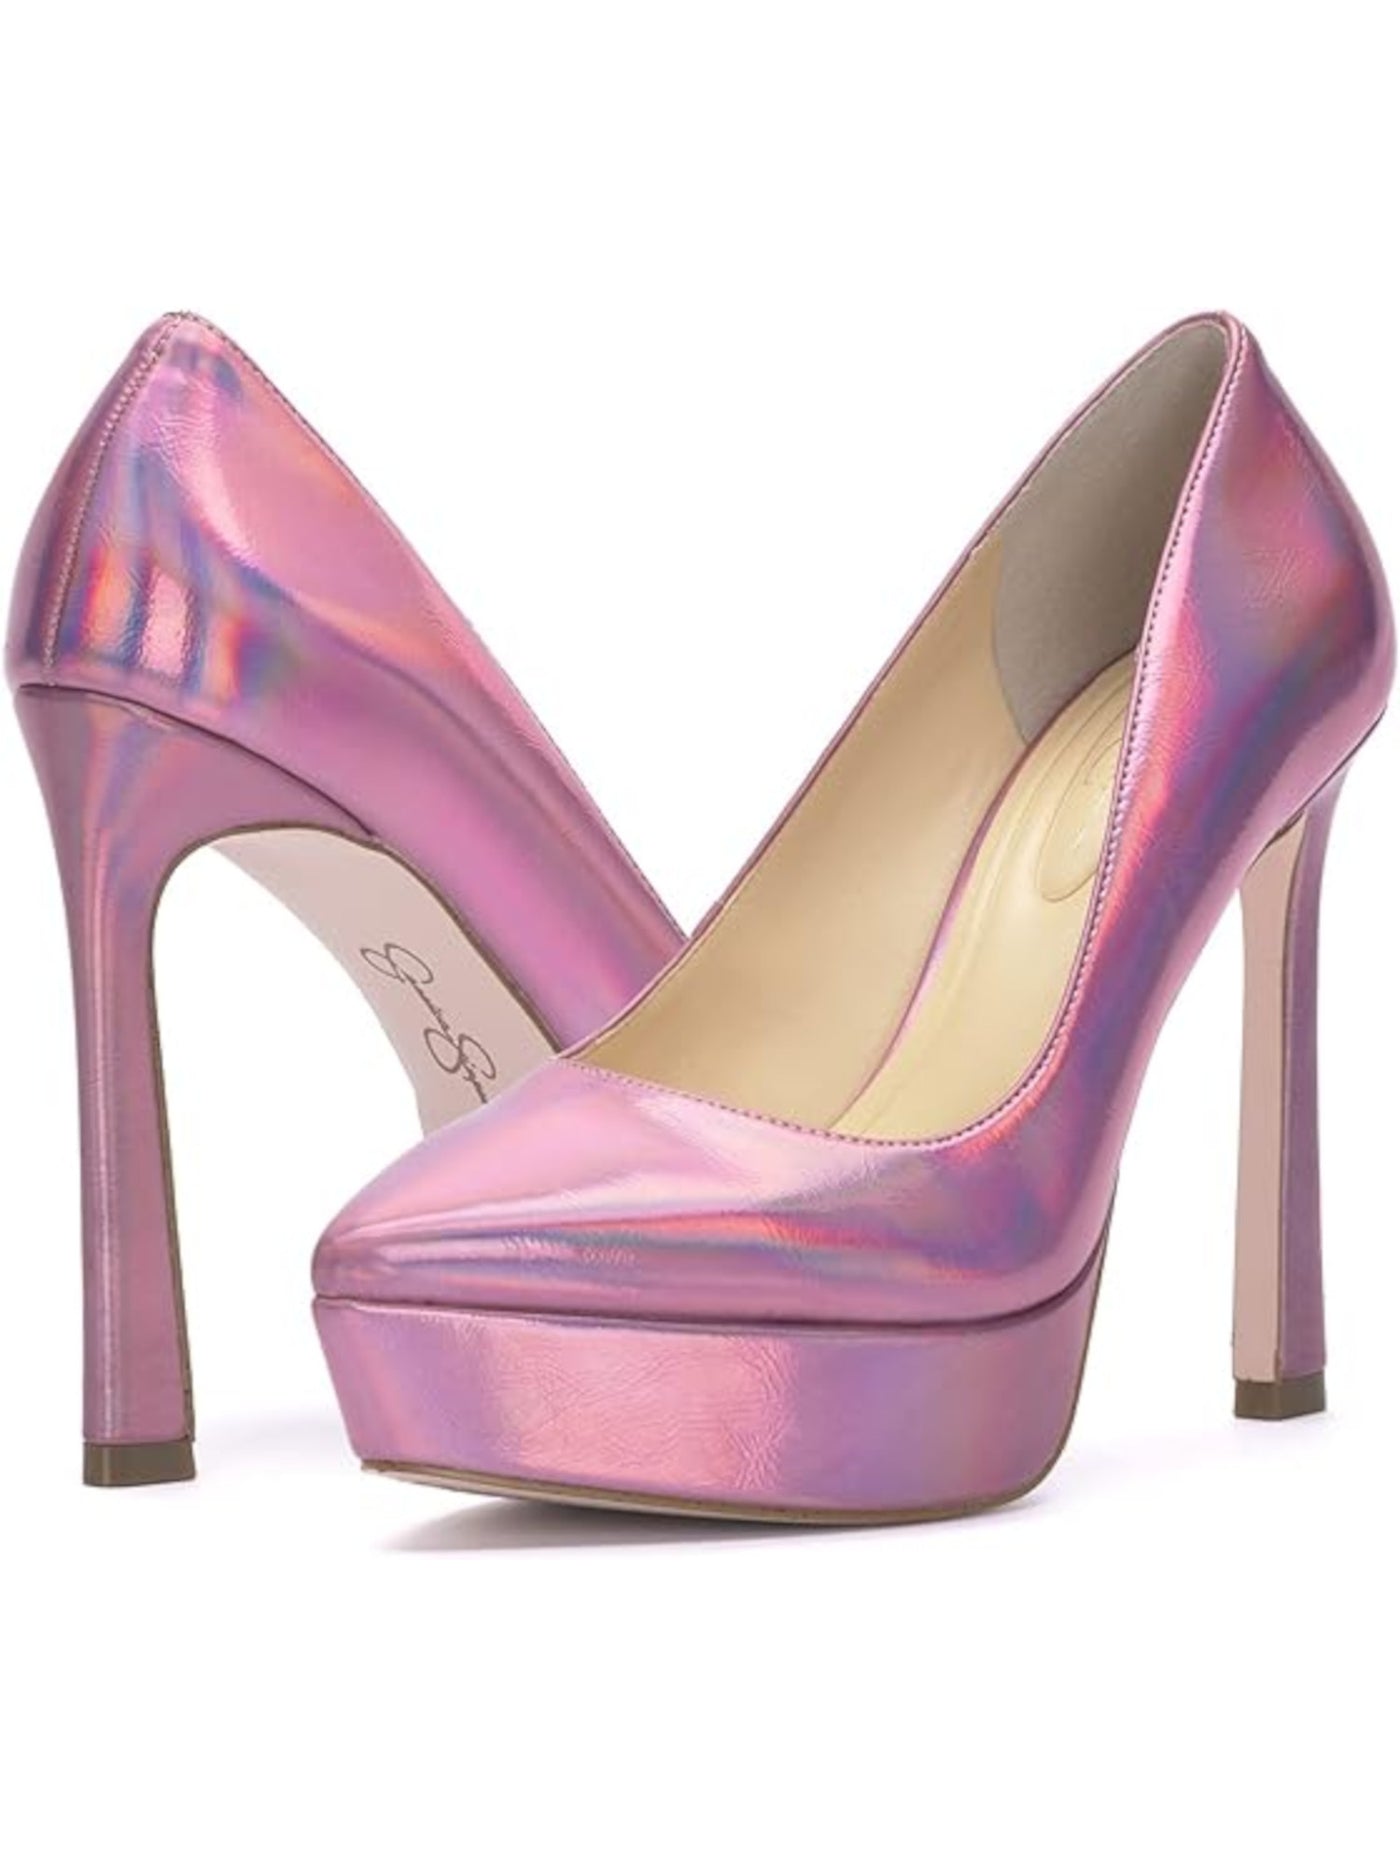 JESSICA SIMPSON Womens Pink 1" Platform Cushioned Jariah Pointed Toe Platform Slip On Dress Pumps Shoes 5.5 M